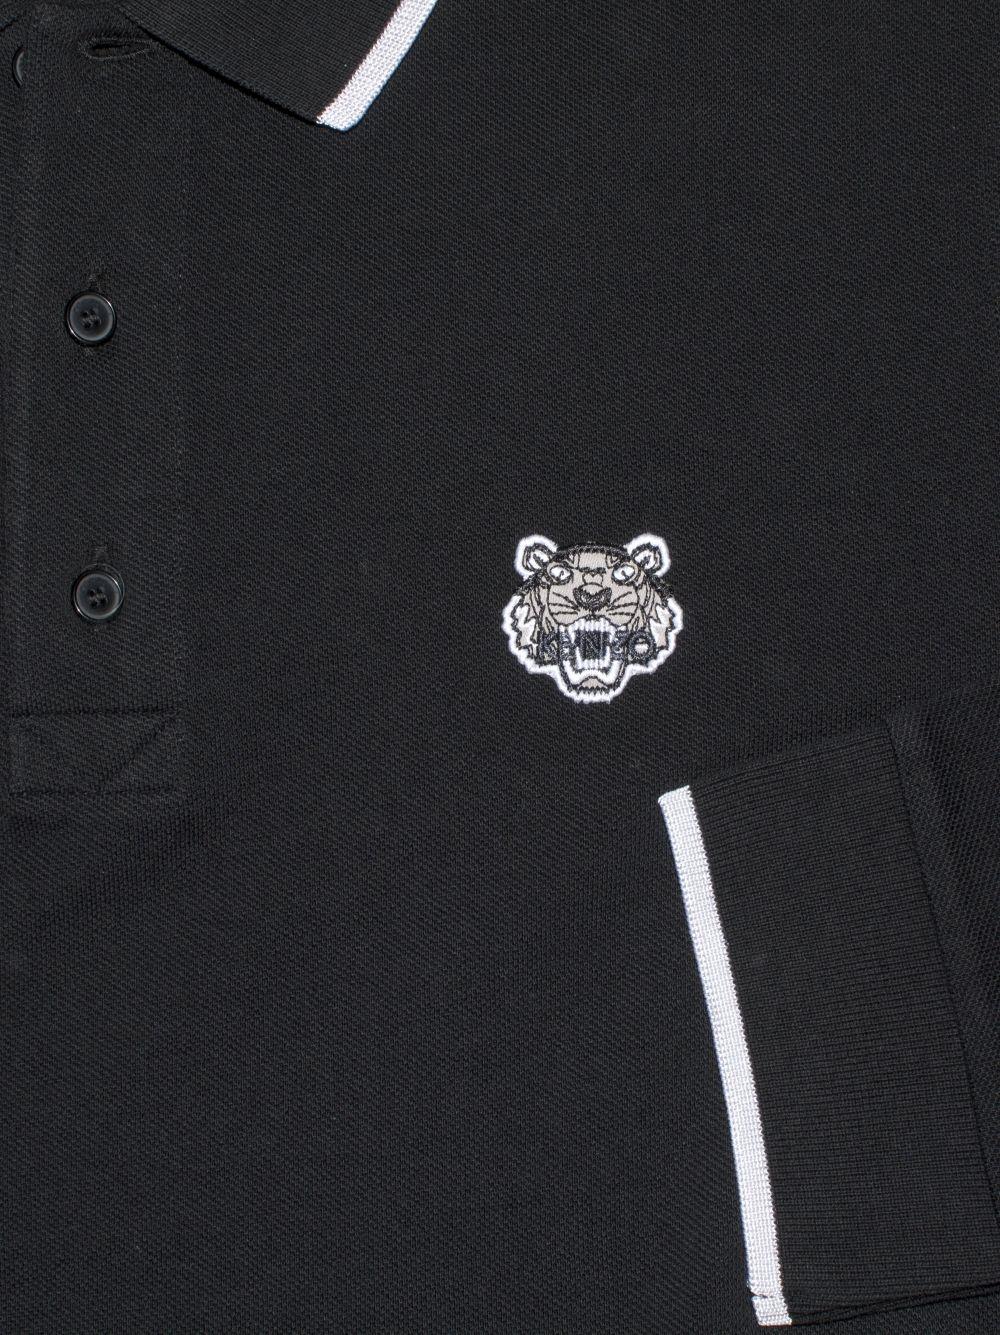 Black Polo Logo - Kenzo Clothing | Mens Kenzo Long Sleeve Polo Shirts | Wide Range